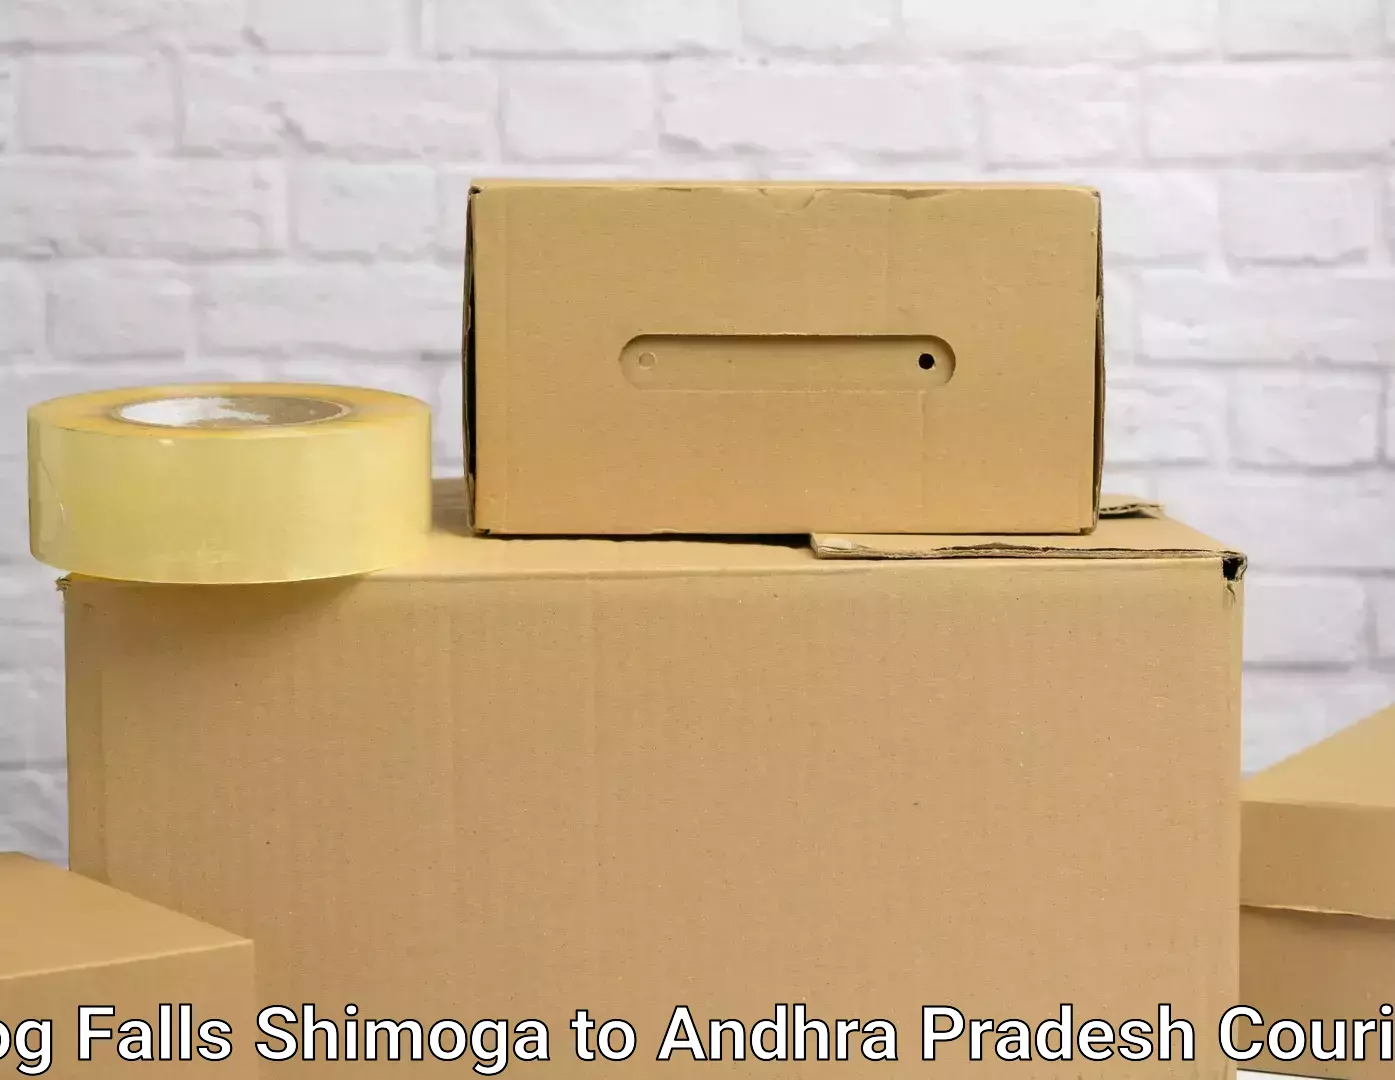 Specialized moving company Jog Falls Shimoga to Sri City